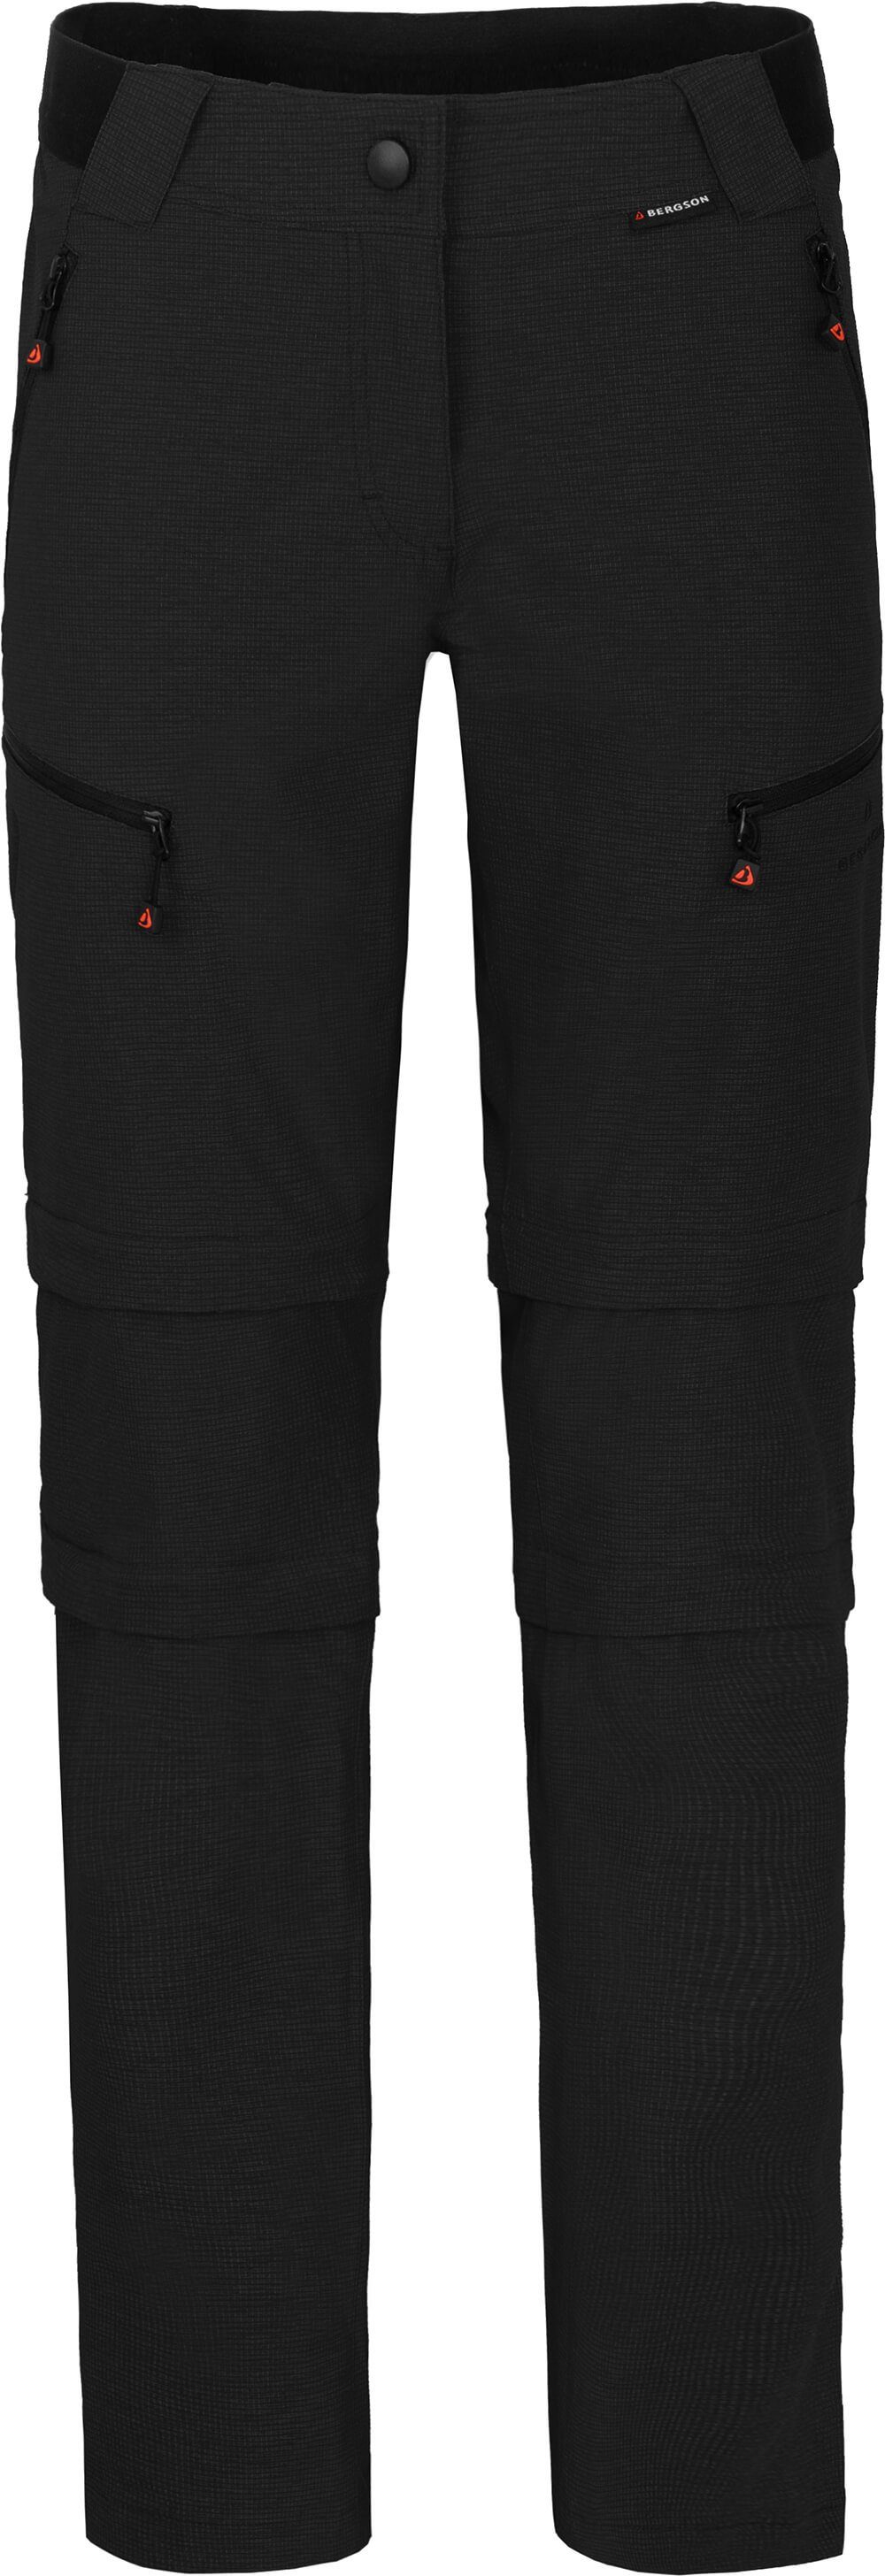 Doppel Wanderhose, elastisch, T-ZIPP PORI mit robust schwarz Zipp-Off Damen Zip-off-Hose Normalgrößen, Bergson